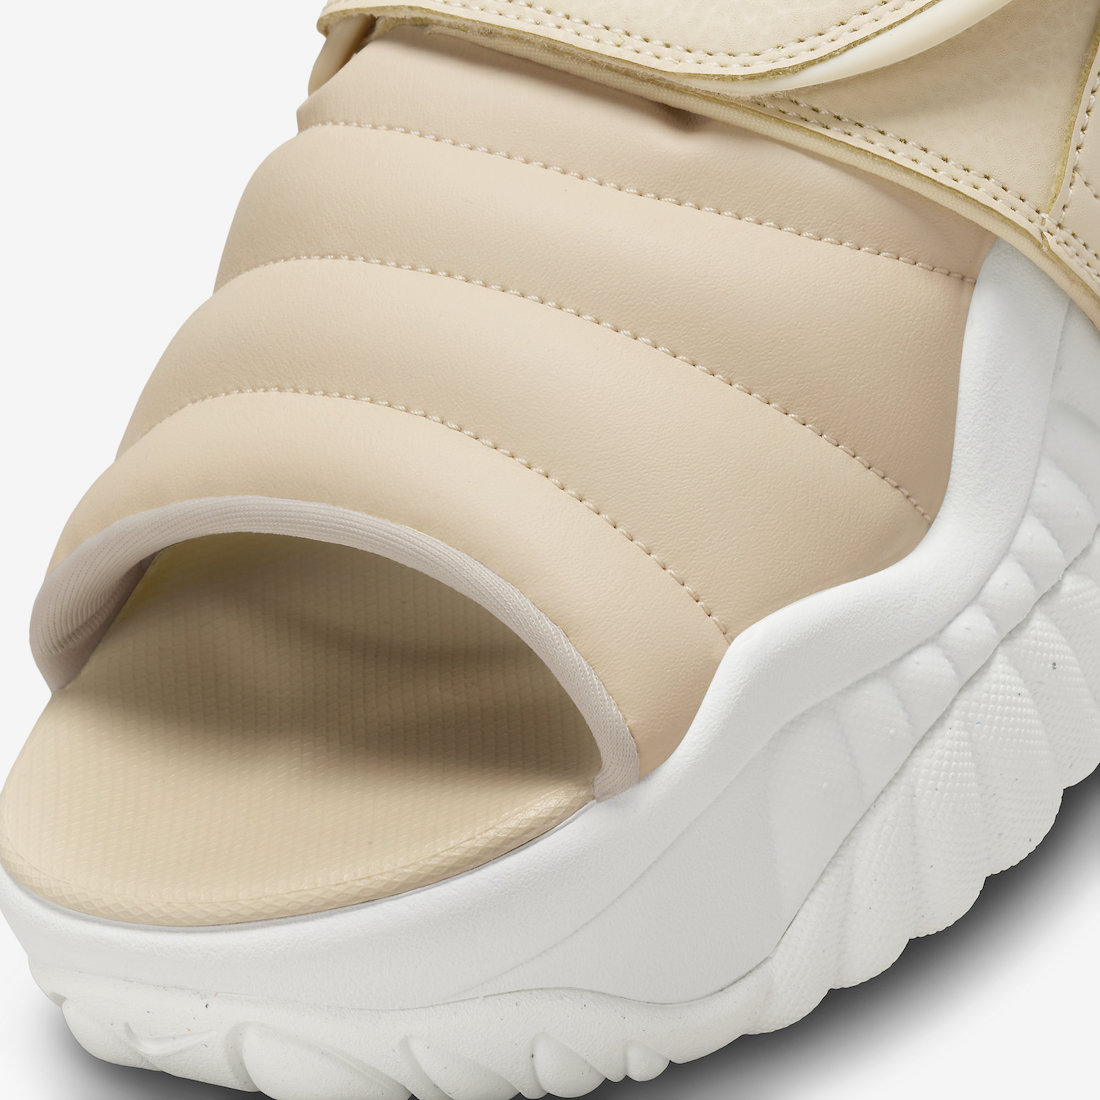 Nike Air Adjust Force Sandal White Tan DV2136-101